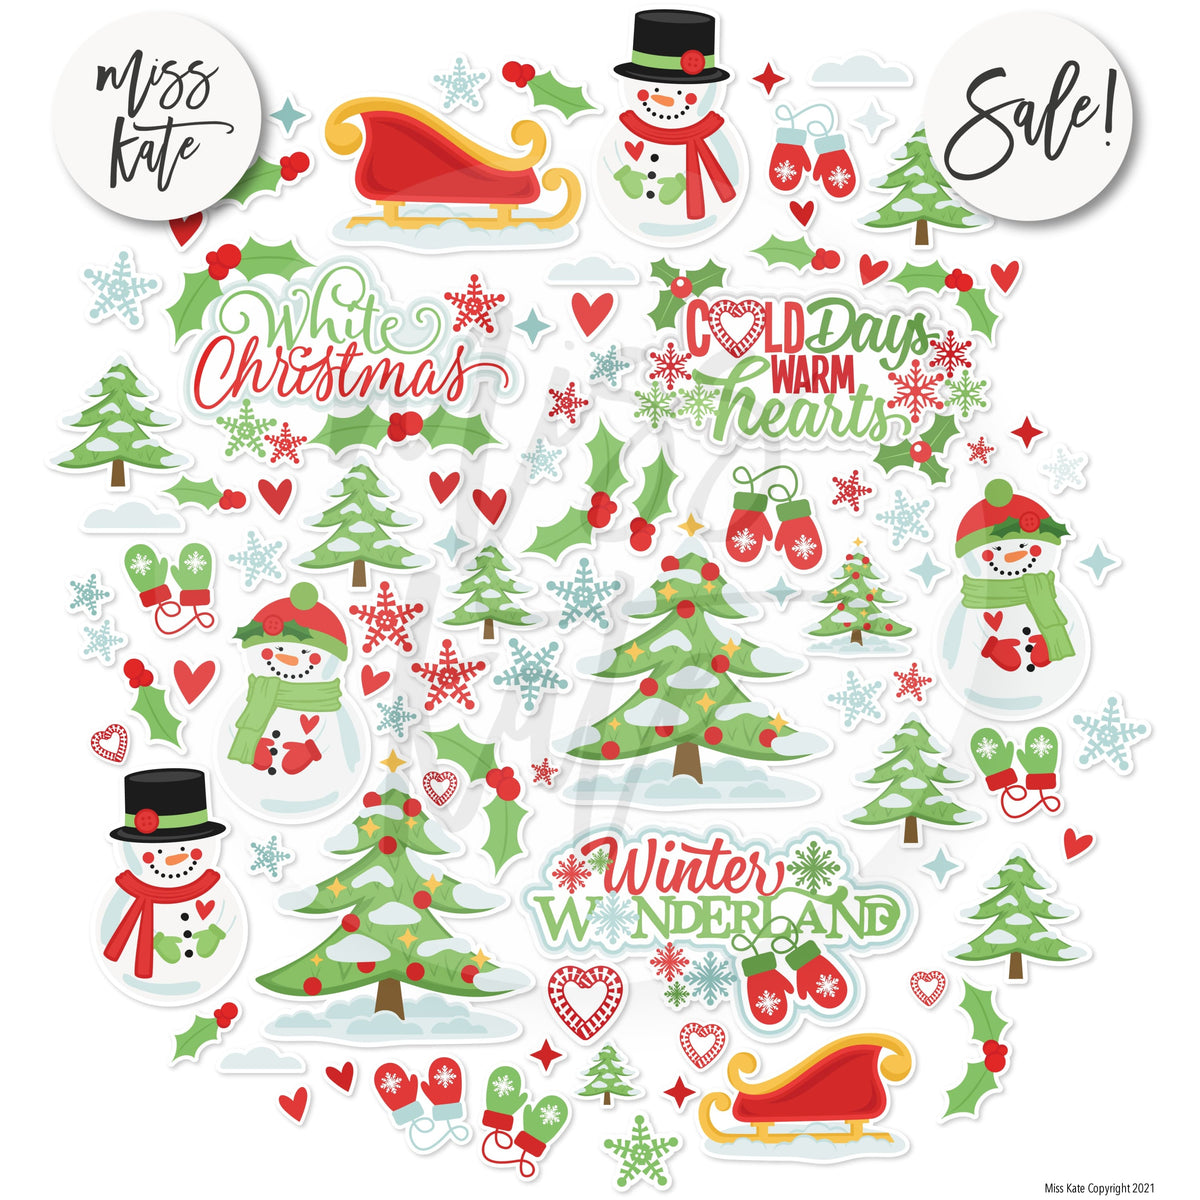 Festive Christmas - Scrapbook Paper & Sticker Kit 12x12 – MISS KATE